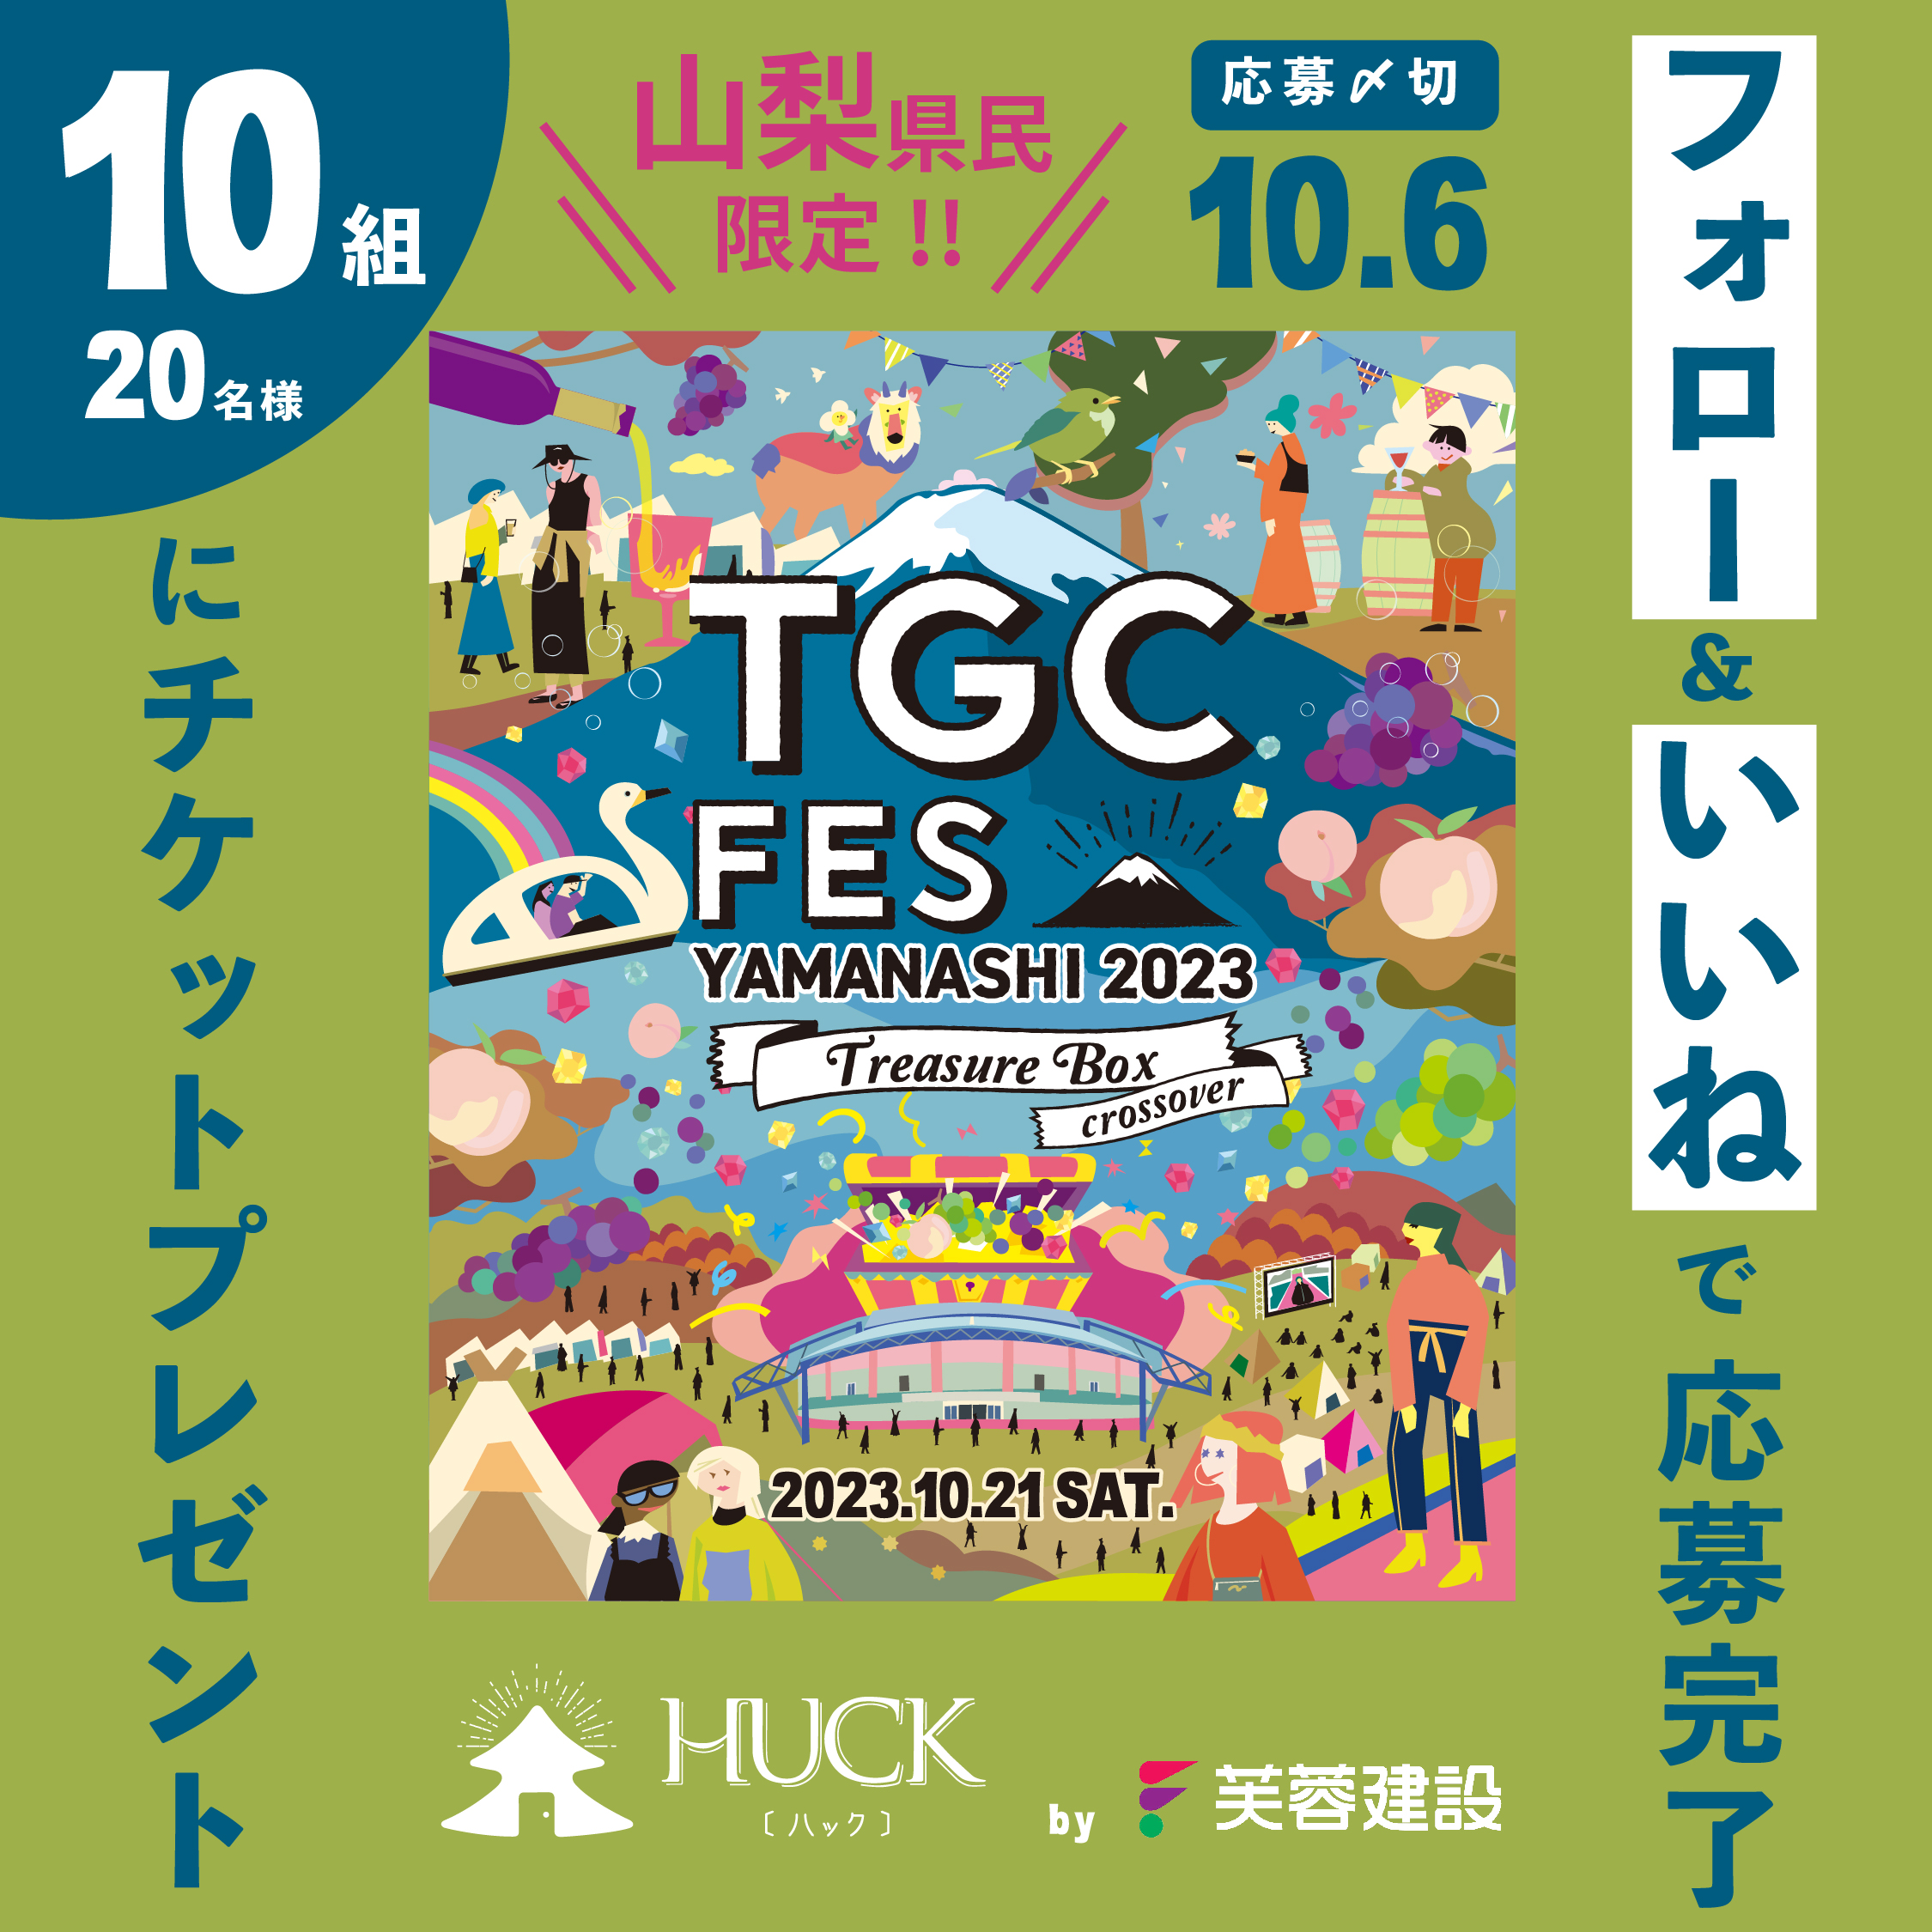 TGC FES YAMANASHI 2023チケットプレゼントキャンペーン実施中！